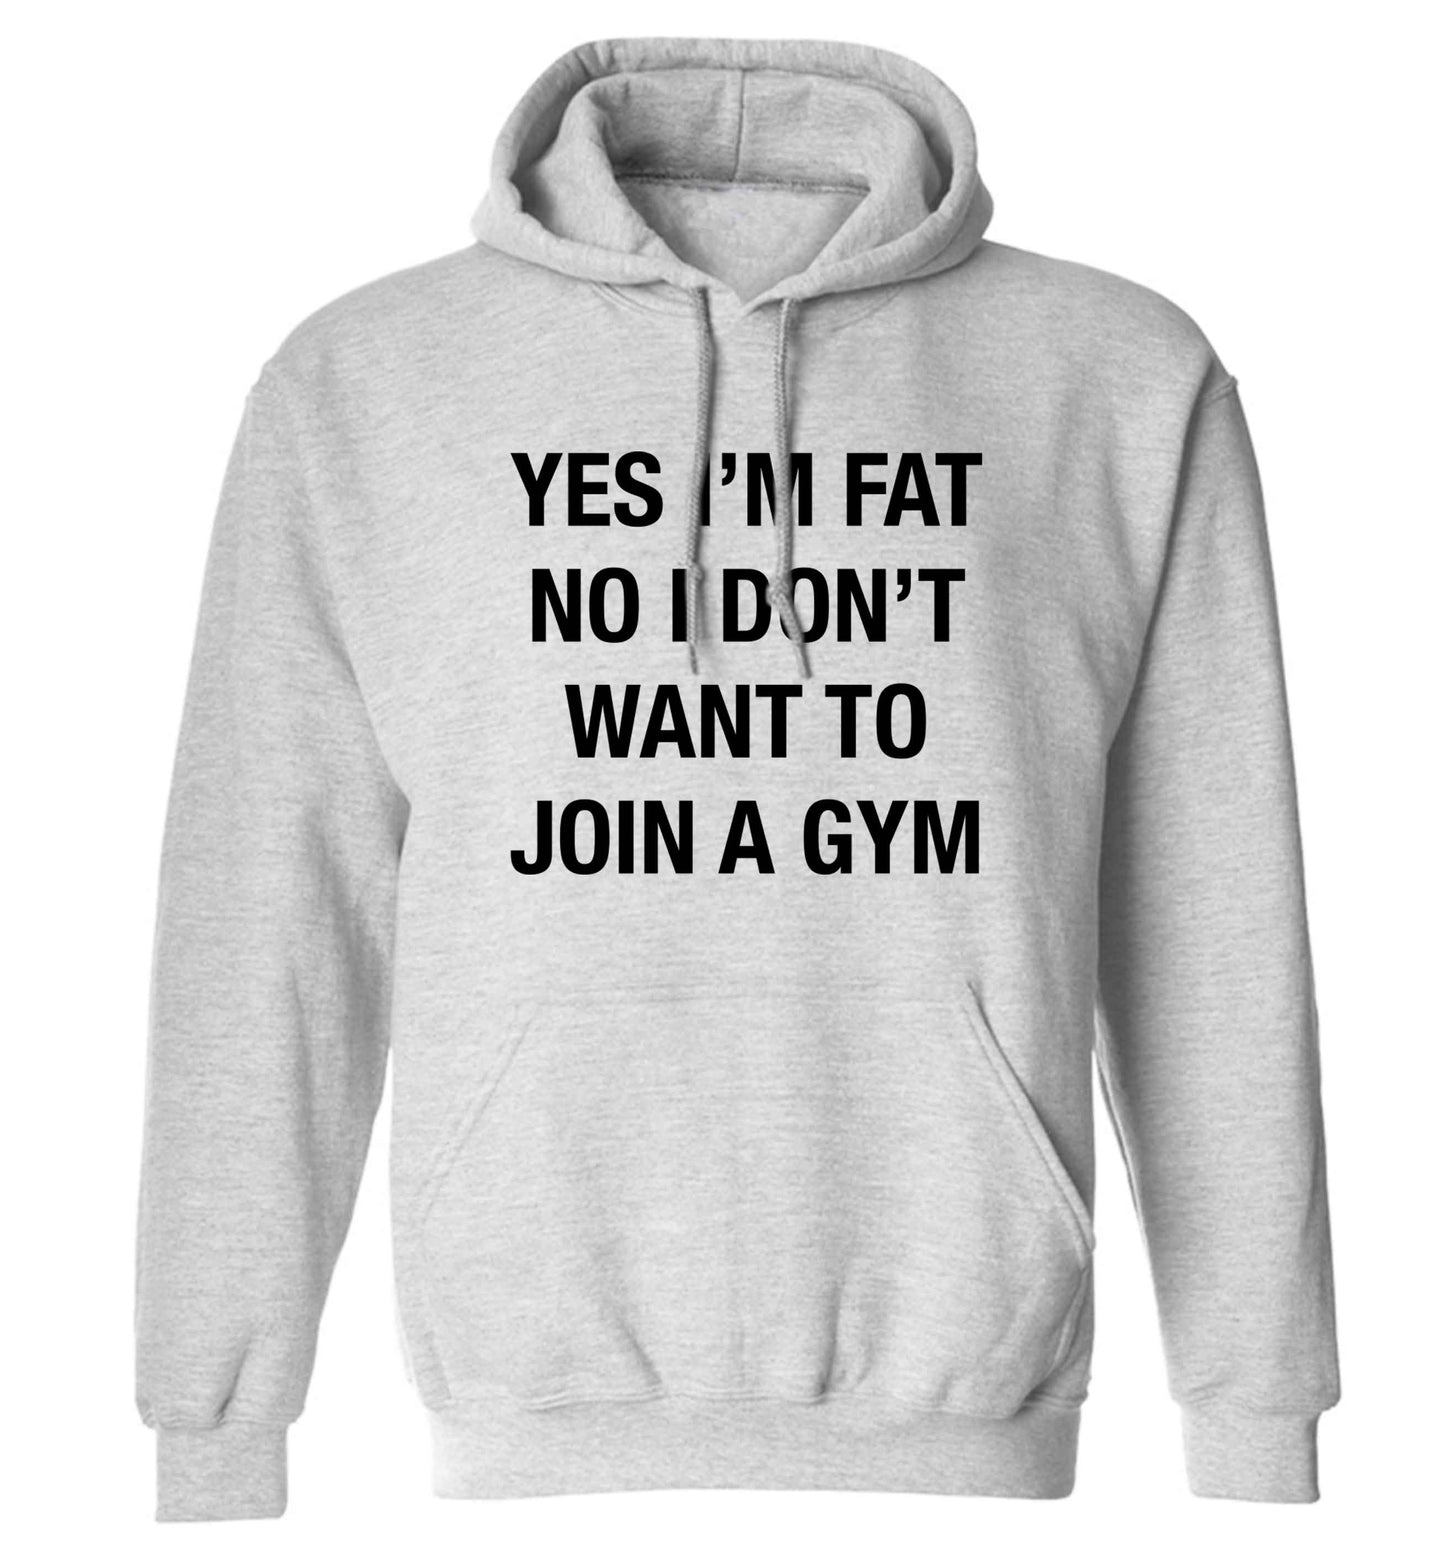 Yes I'm fat, no I don't want to go to the gym adults unisex grey hoodie 2XL